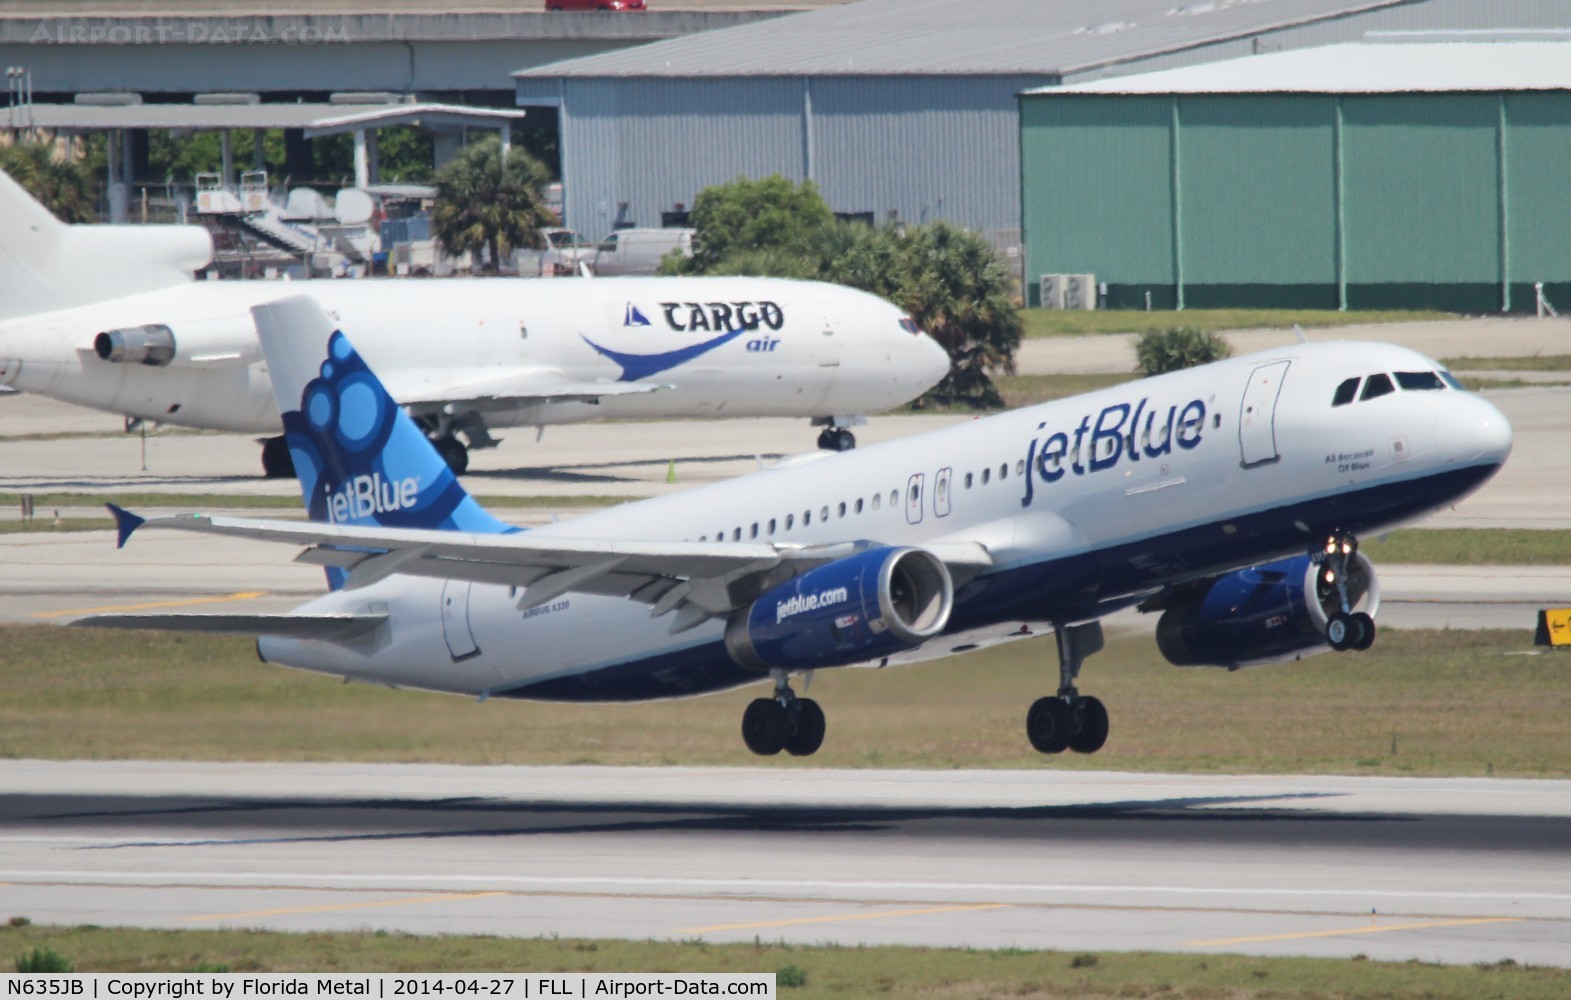 N635JB, 2006 Airbus A320-232 C/N 2725, Jet Blue